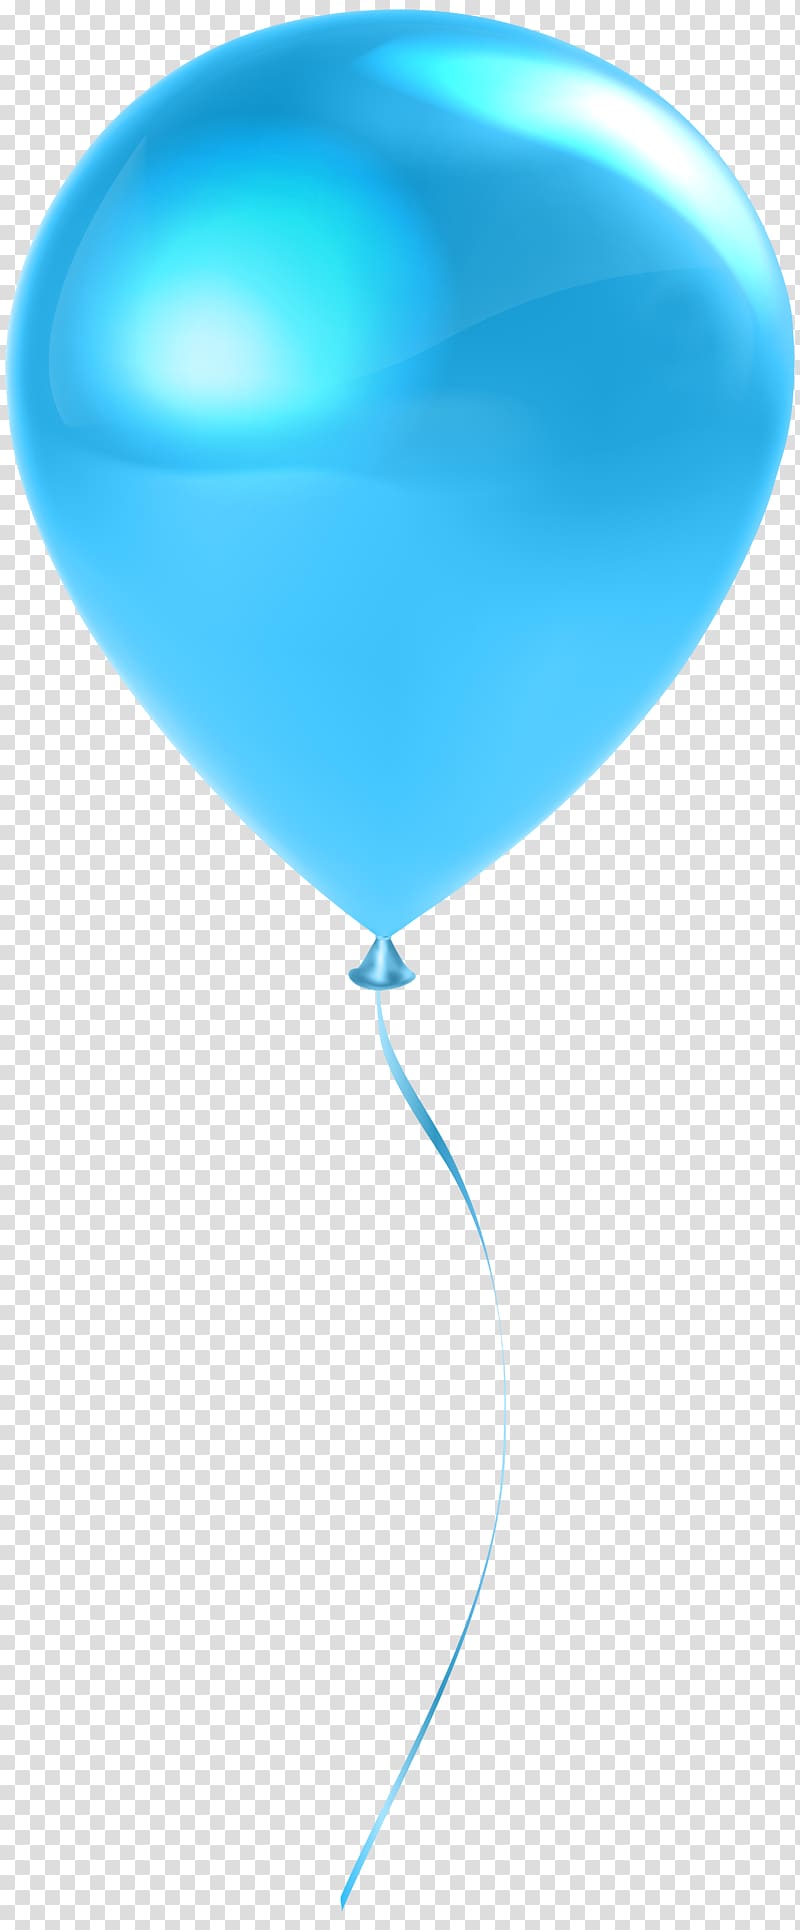 blue balloon illustration, Blue Sky Balloon, Single Sky Blue Balloon transparent background PNG clipart